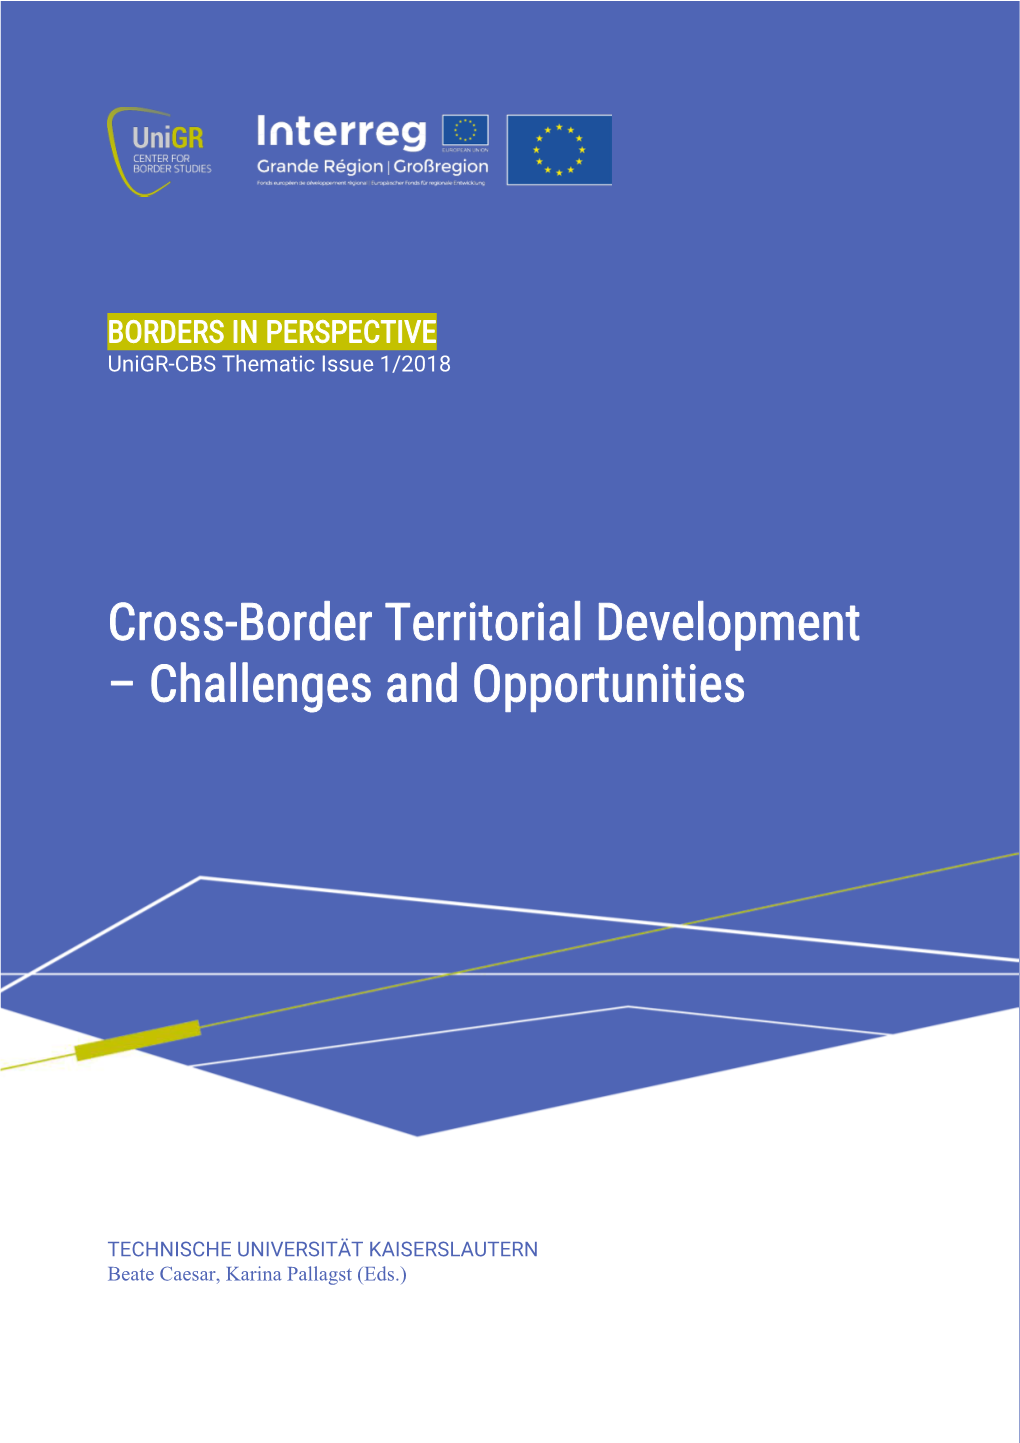 Cross-Border Territorial Development – Challenges and Opportunities